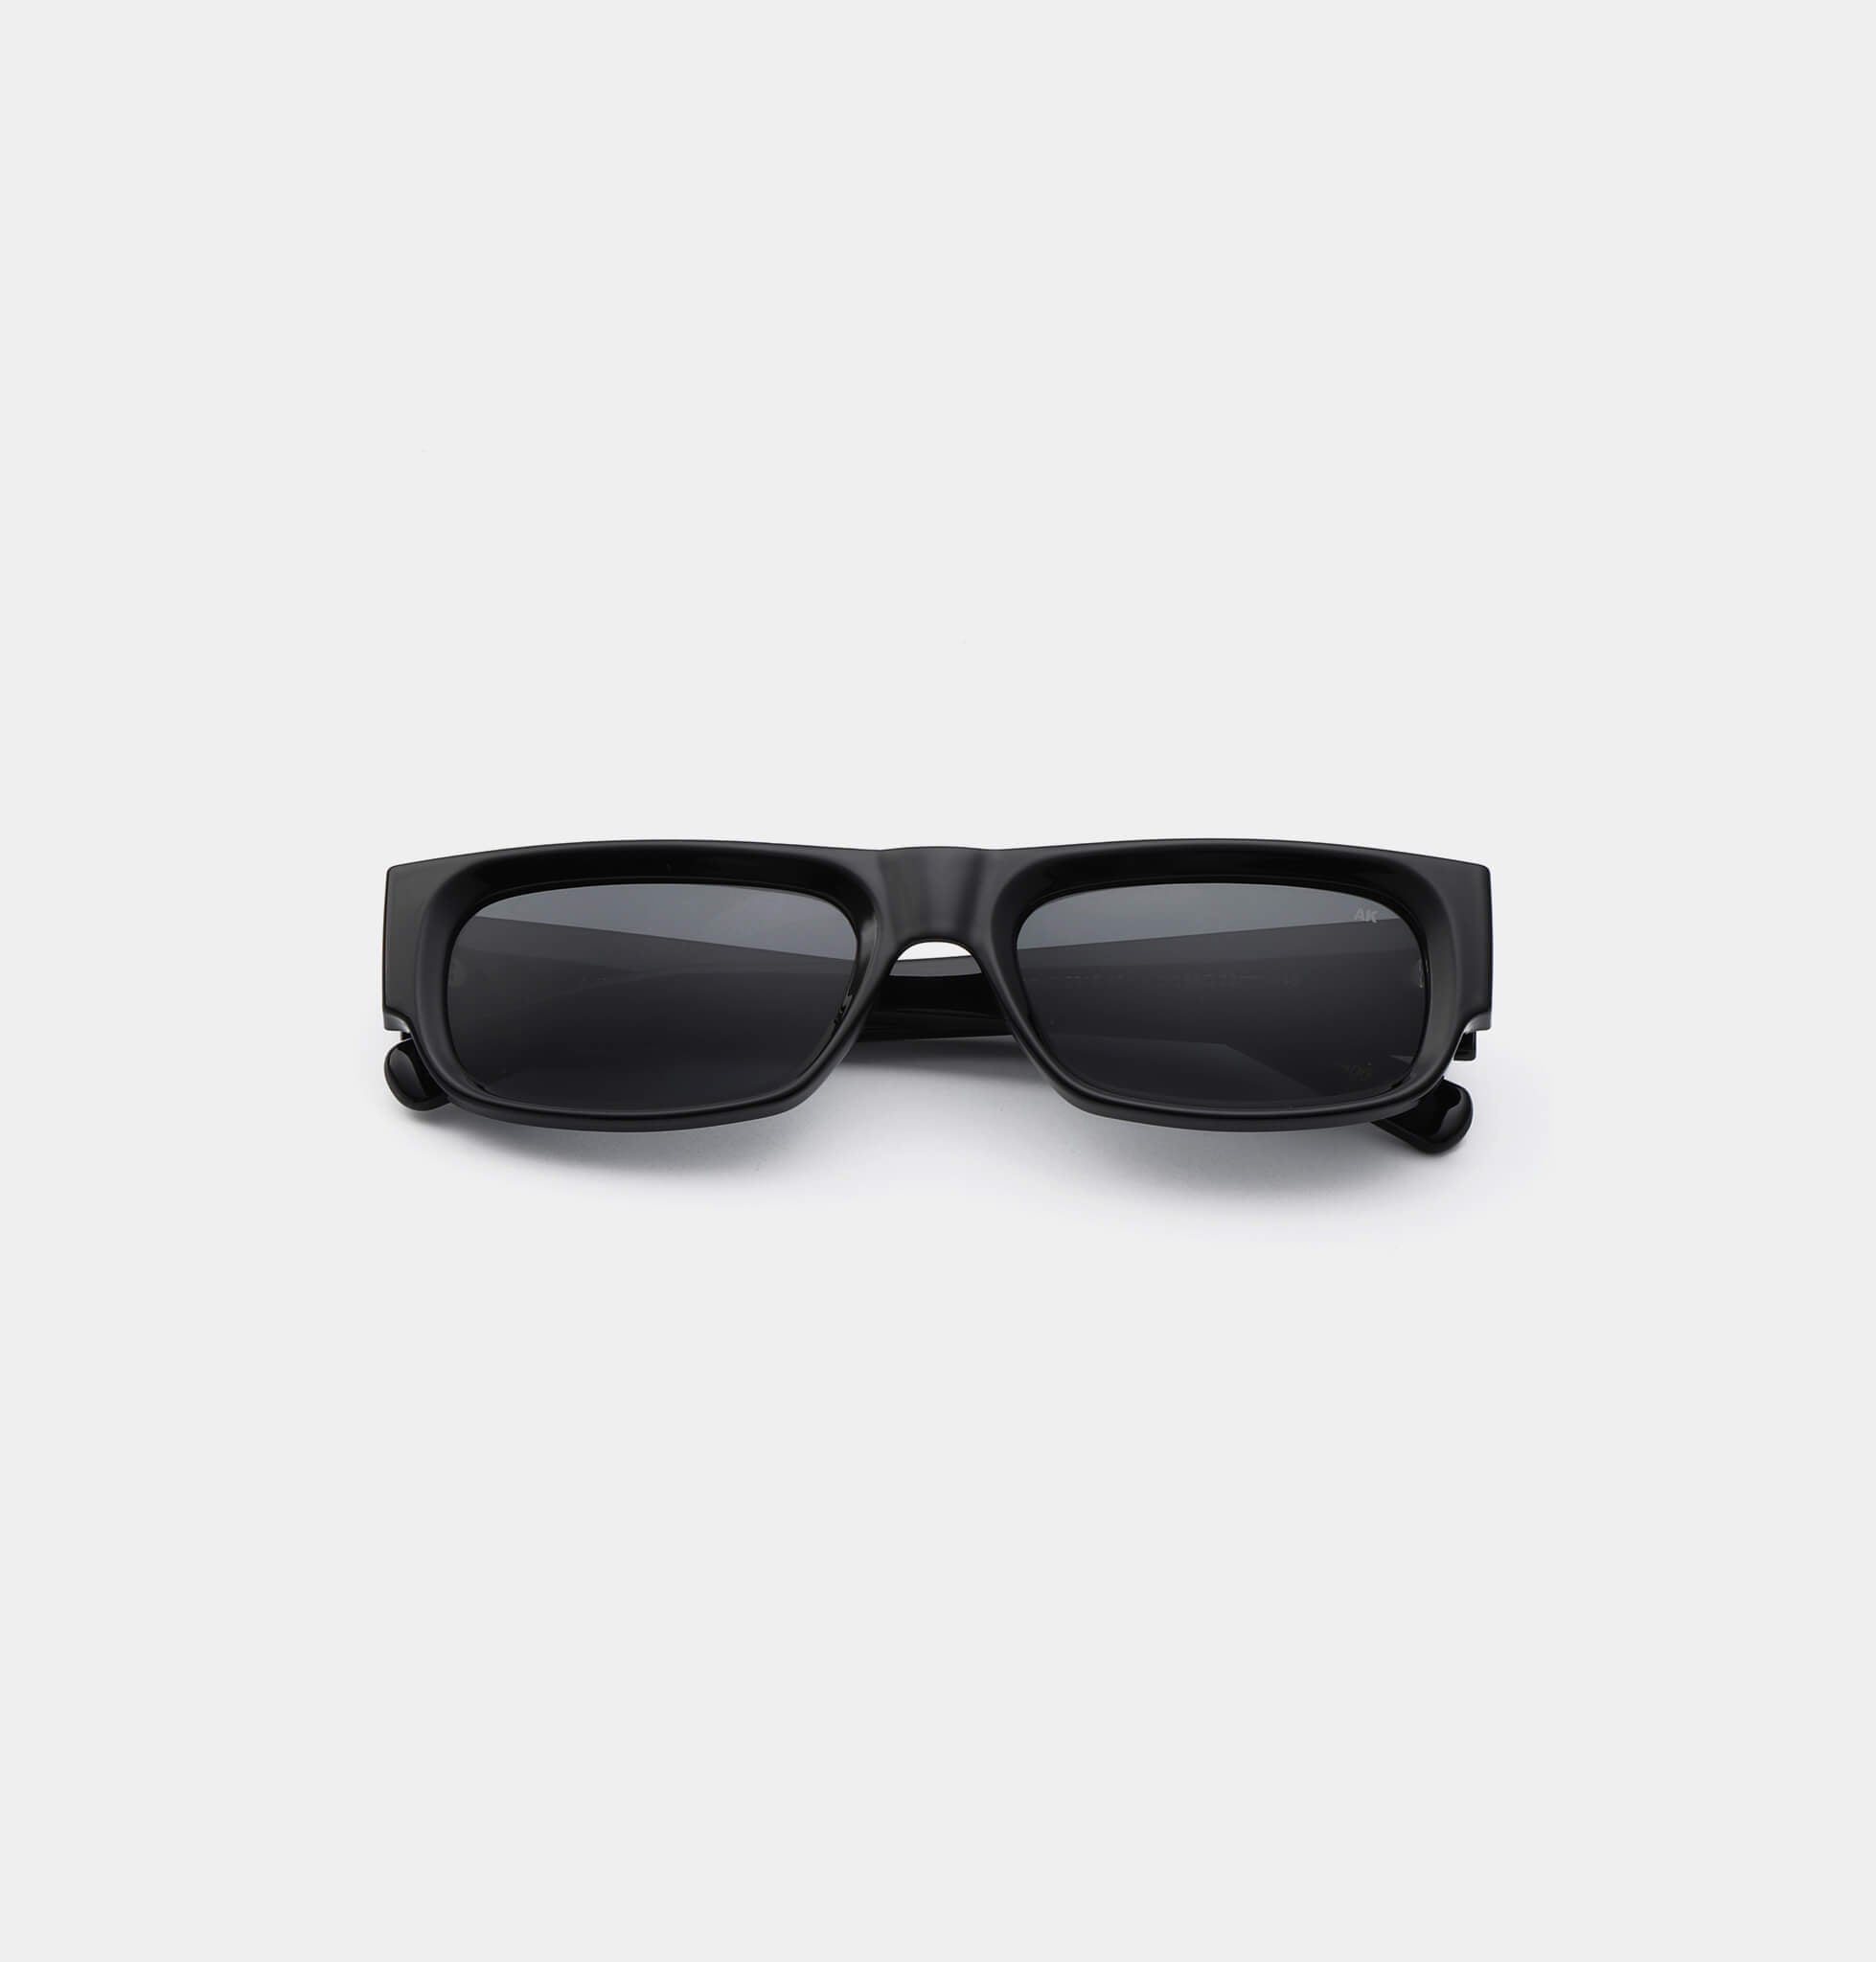 jean sunglasses - black